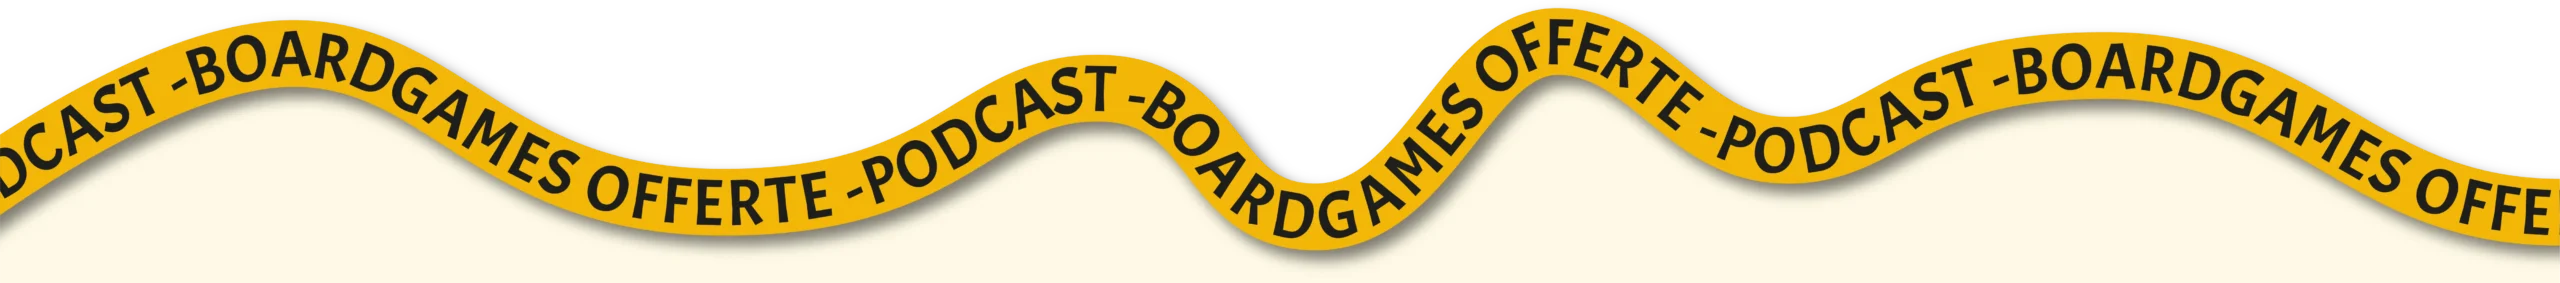 boardgames offerte - podcast